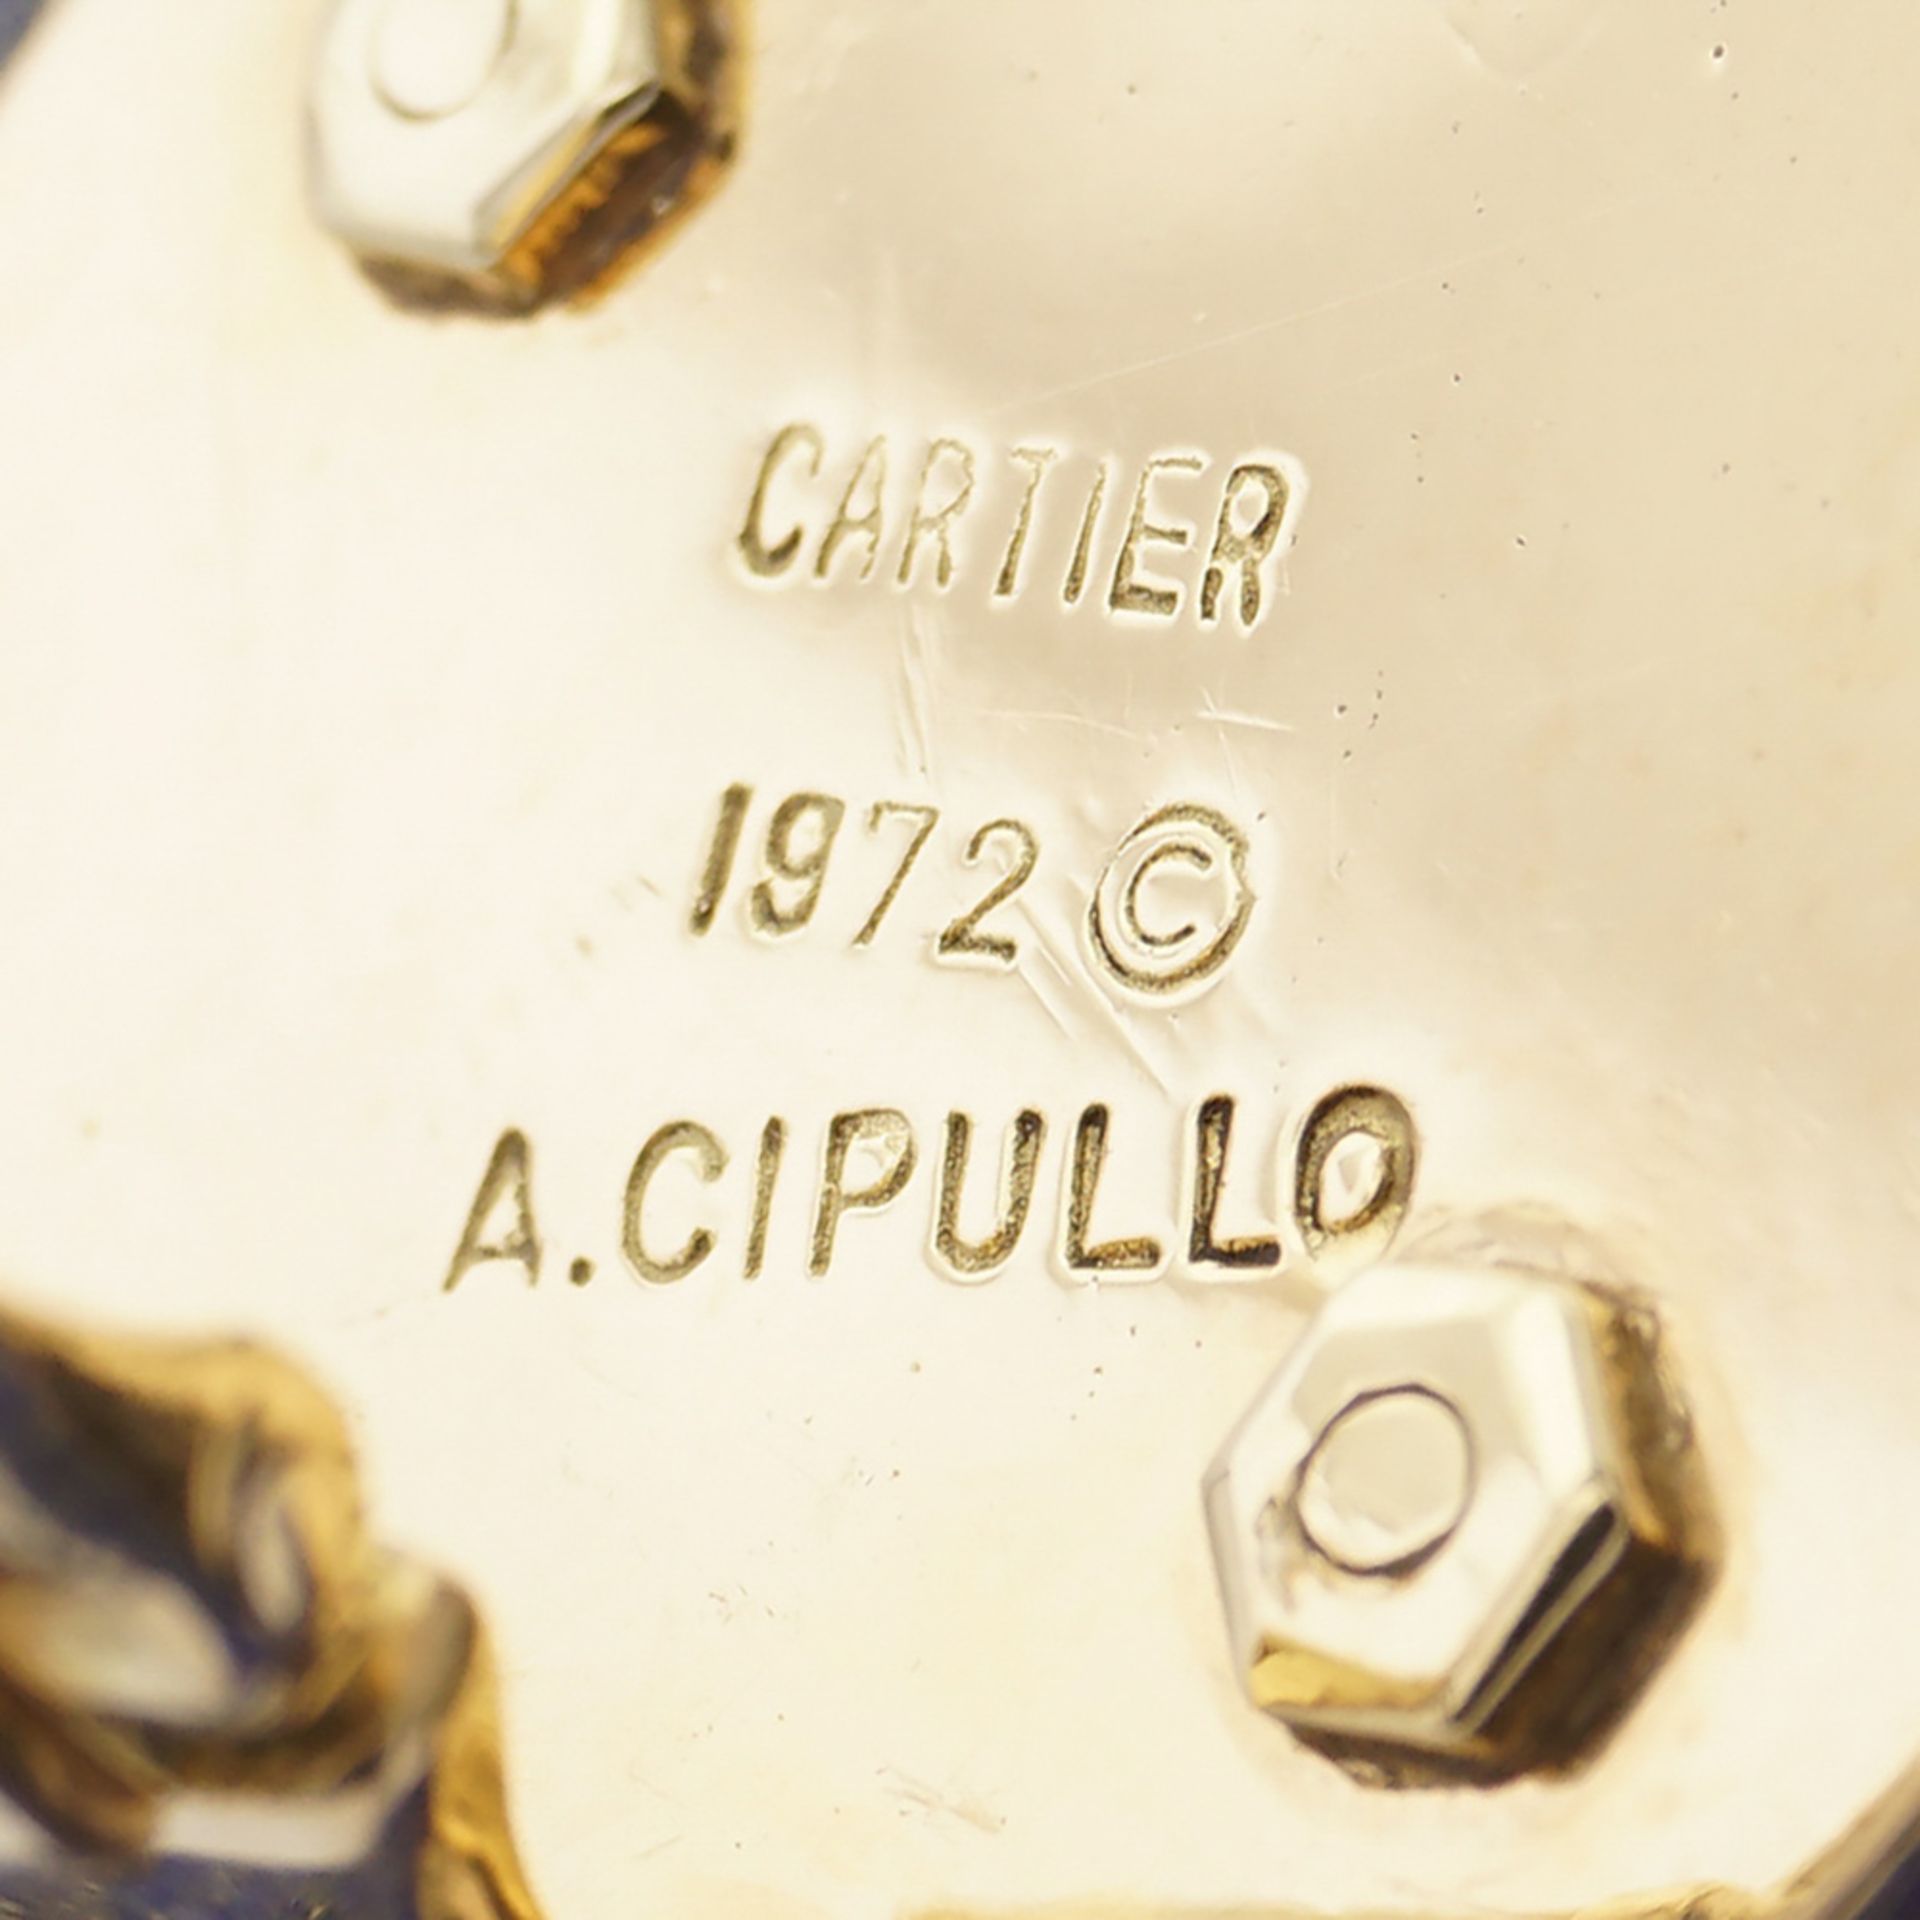 Cartier A. Cipullo, lobe earrings 1978 weight 41,5 gr. - Image 2 of 2